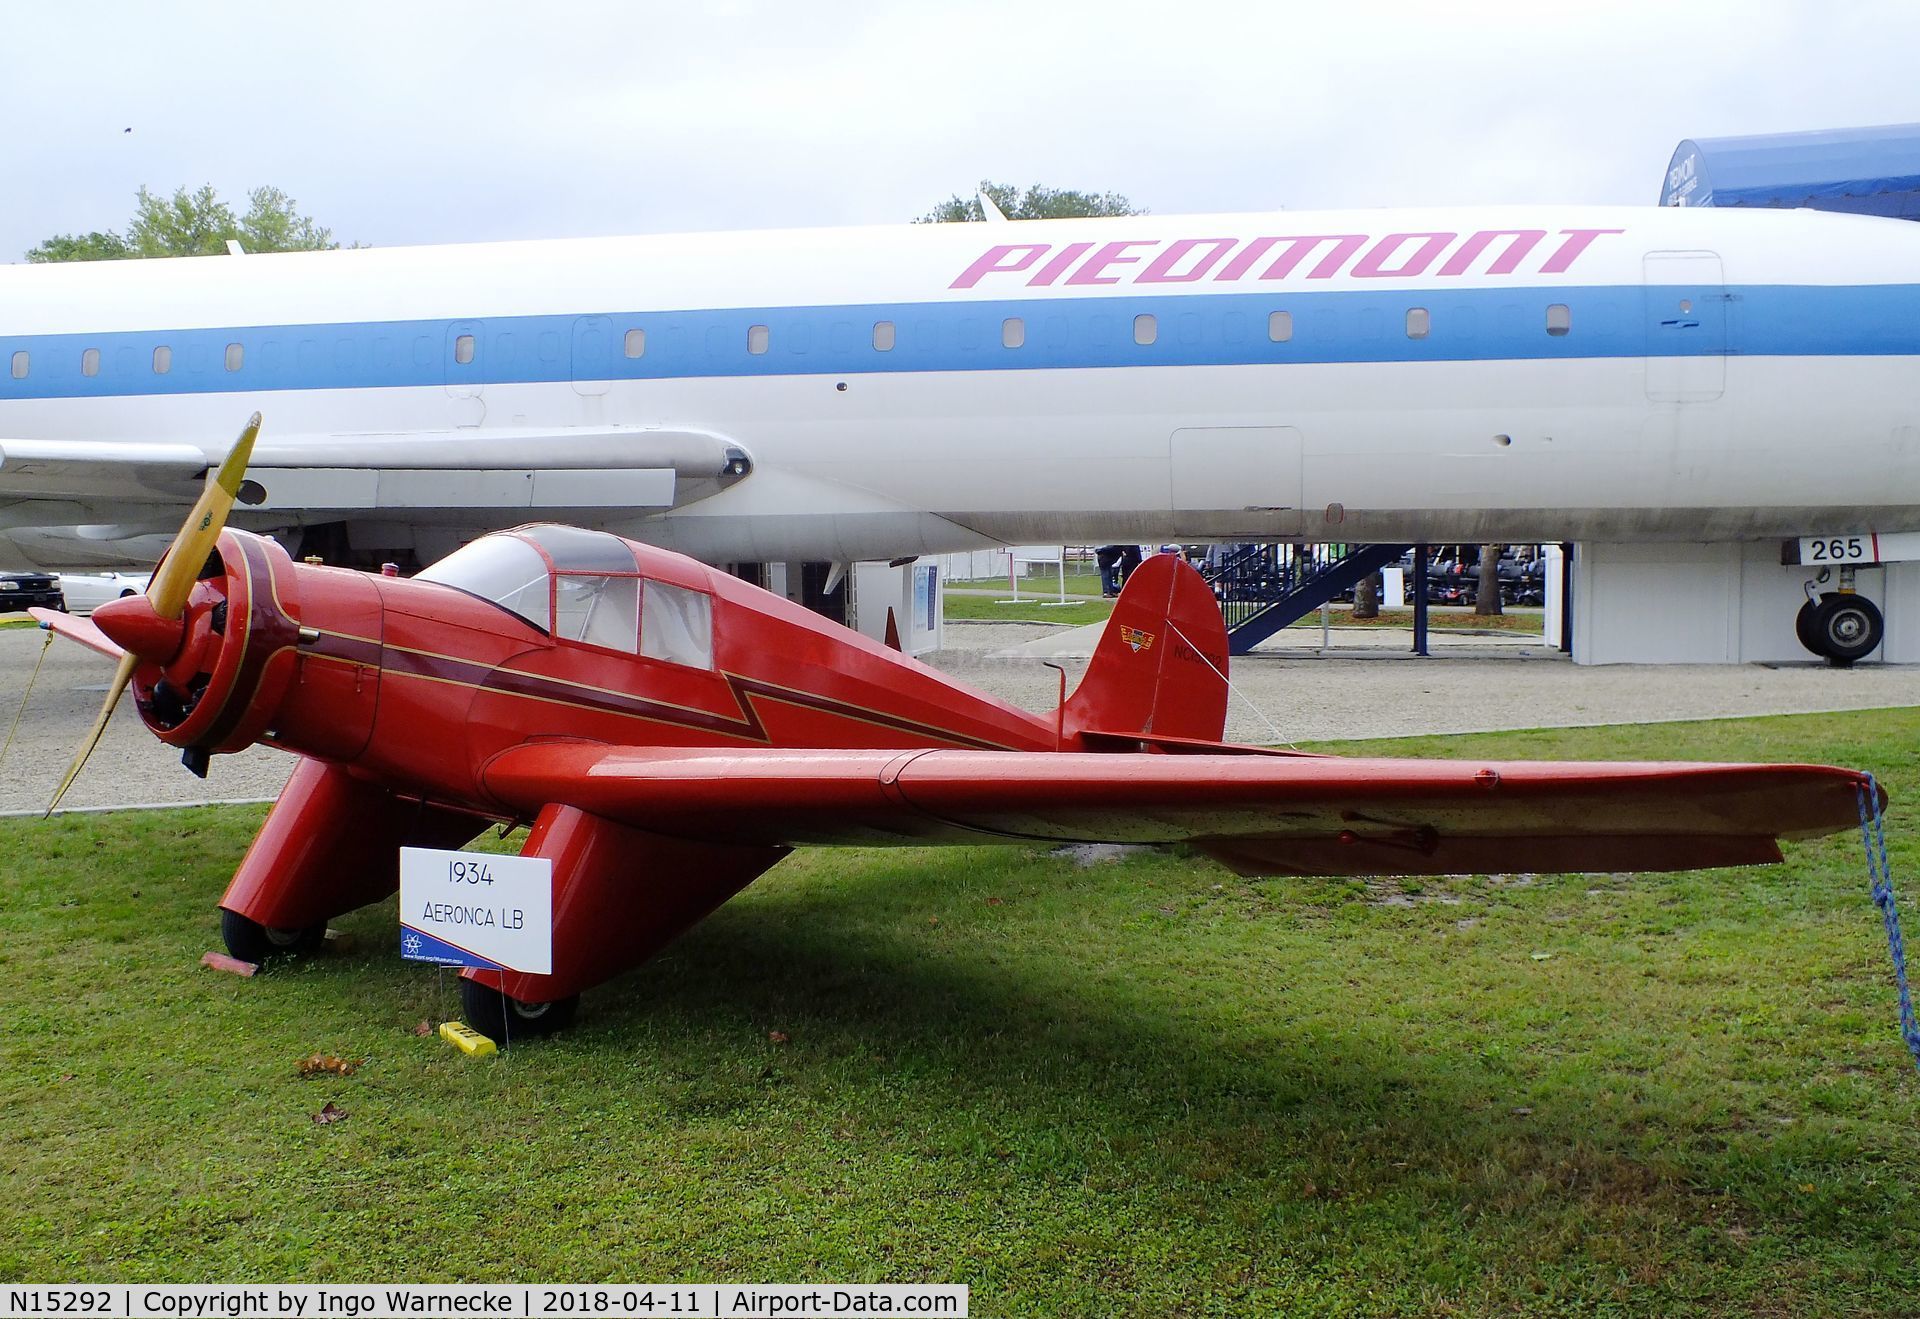 N15292, 1940 Aeronca LB C/N 2000, Aeronca LB outside the Florida Air Museum (ex ISAM) during 2018 Sun 'n Fun, Lakeland FL